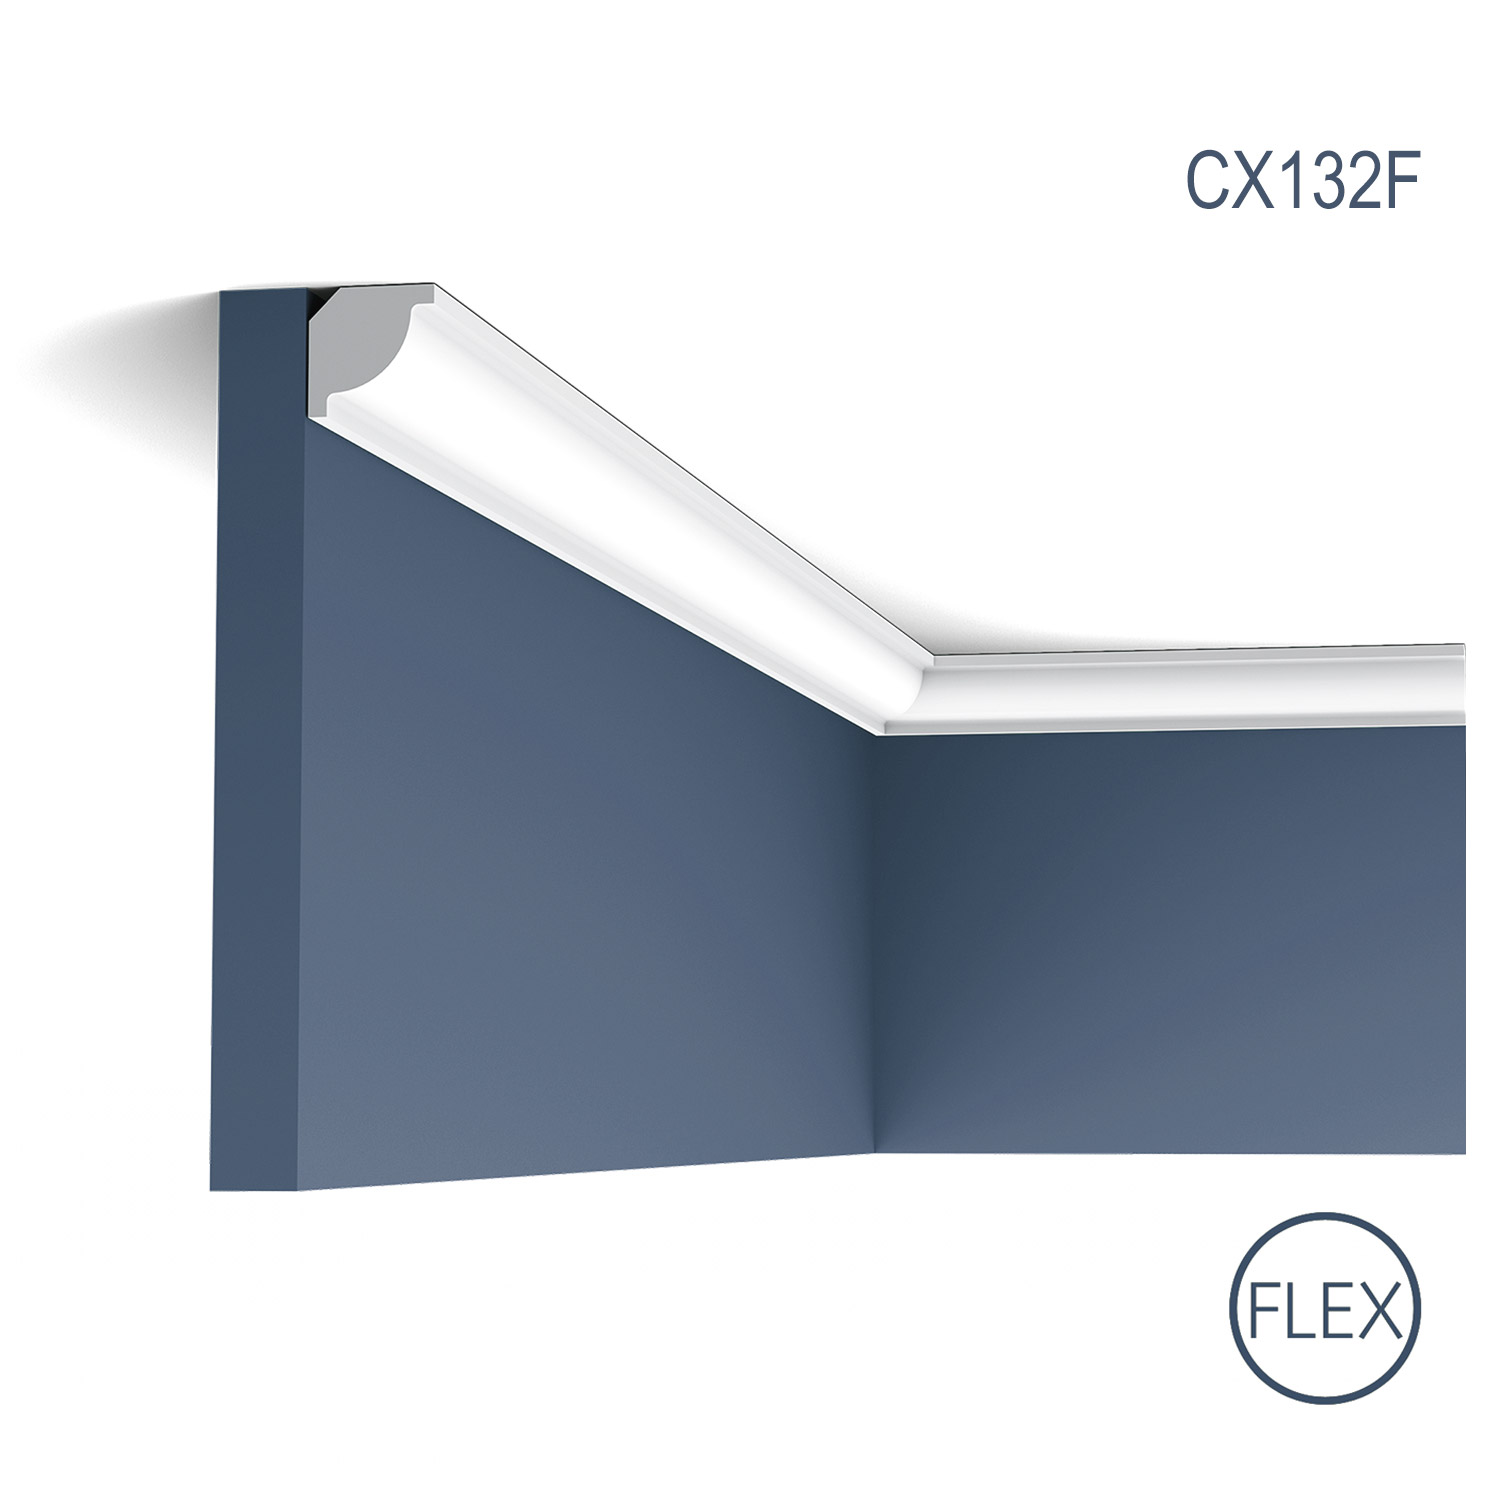 Cornisa Flex Axxent CX132F, Dimensiuni: 200 X 2 X 2 cm, Orac Decor Orac Decor